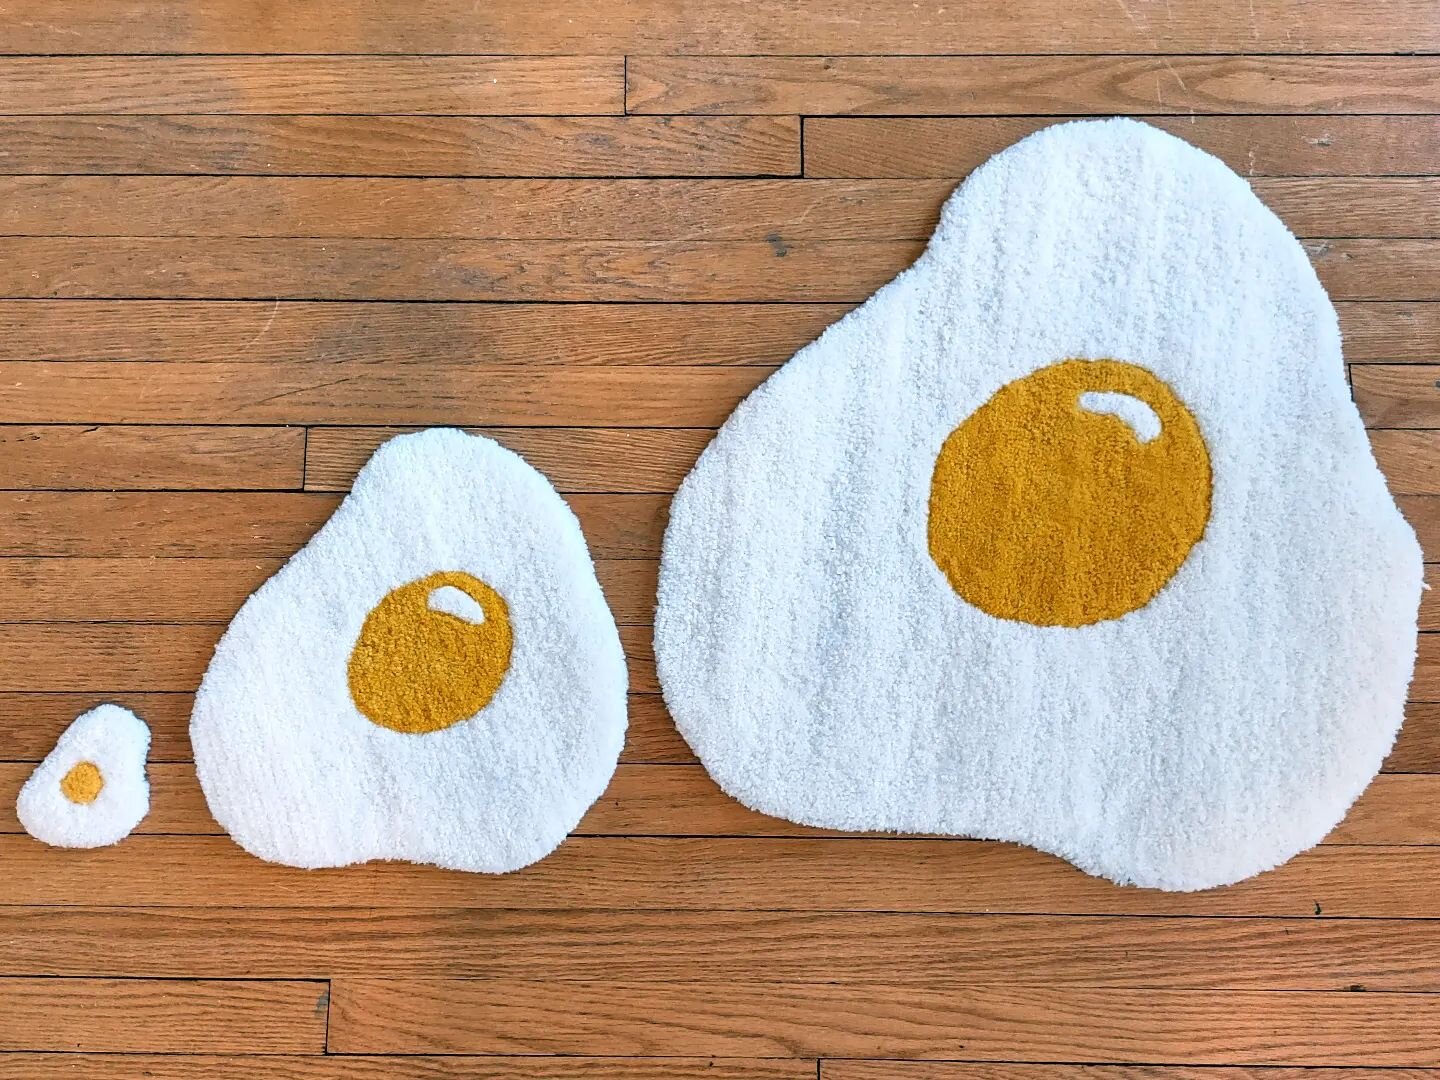 How do you like your eggs? 🐣🥚🍳

#rug #rugmaking #tuft #tufting #rugtufting #tuftinggun #tuftingart #smallbusiness #tufttheworld #tufted #rugs #art #crafts #cartoons #memeart #eggs #breakfast #foodrug #eggrug